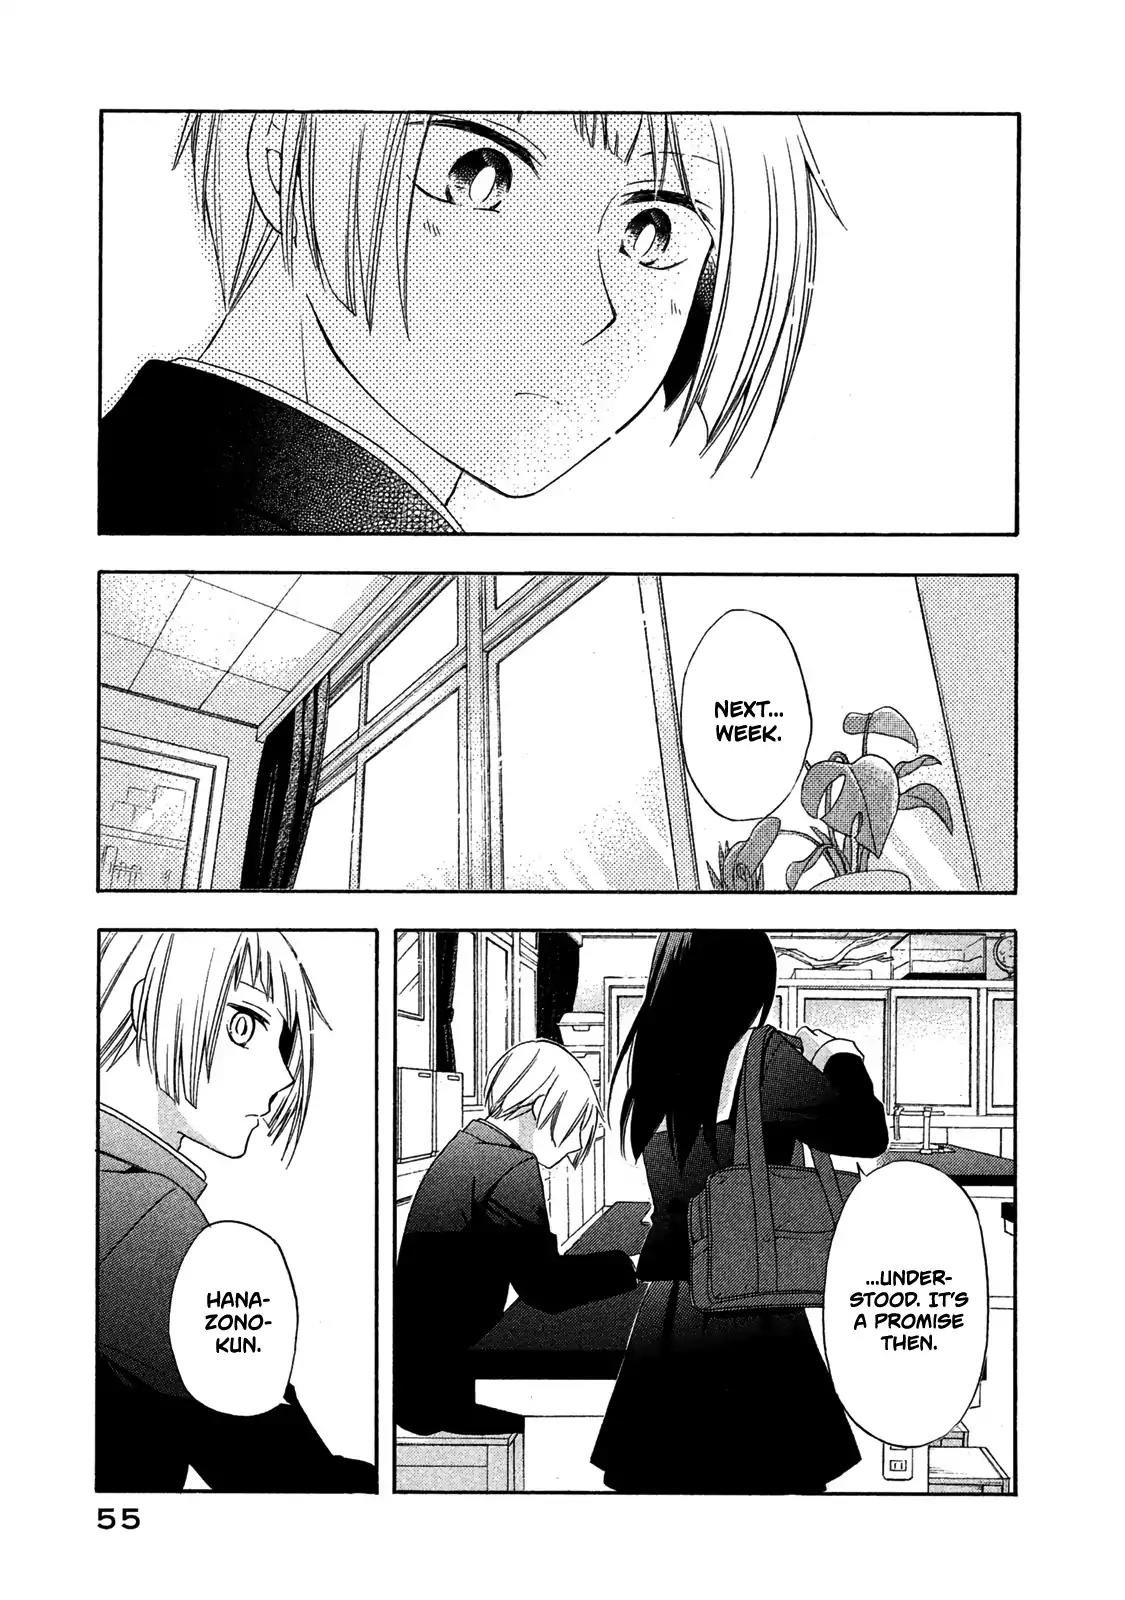 Hanazono and Kazoe's Bizarre After School Rendezvous Vol.1 Chapter 3: